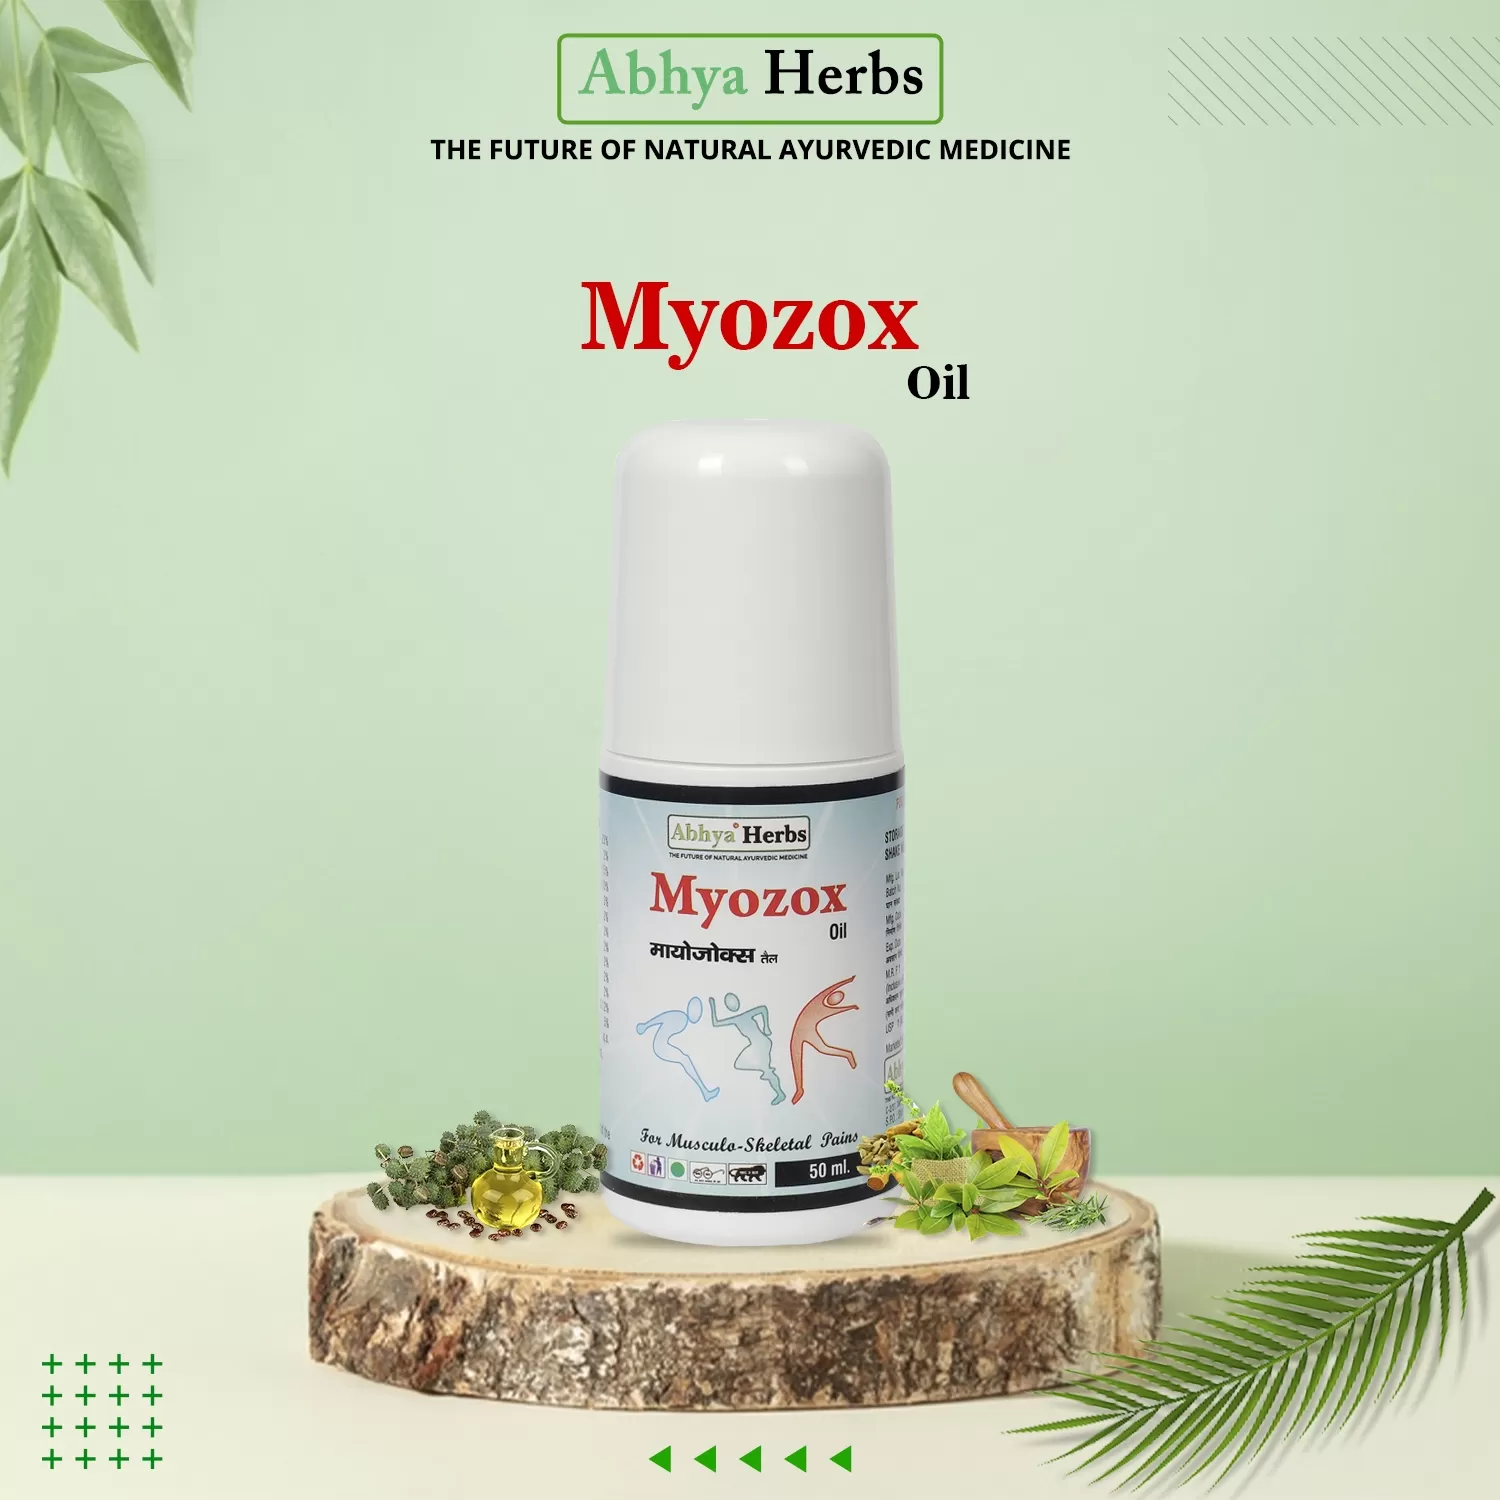 Myozox